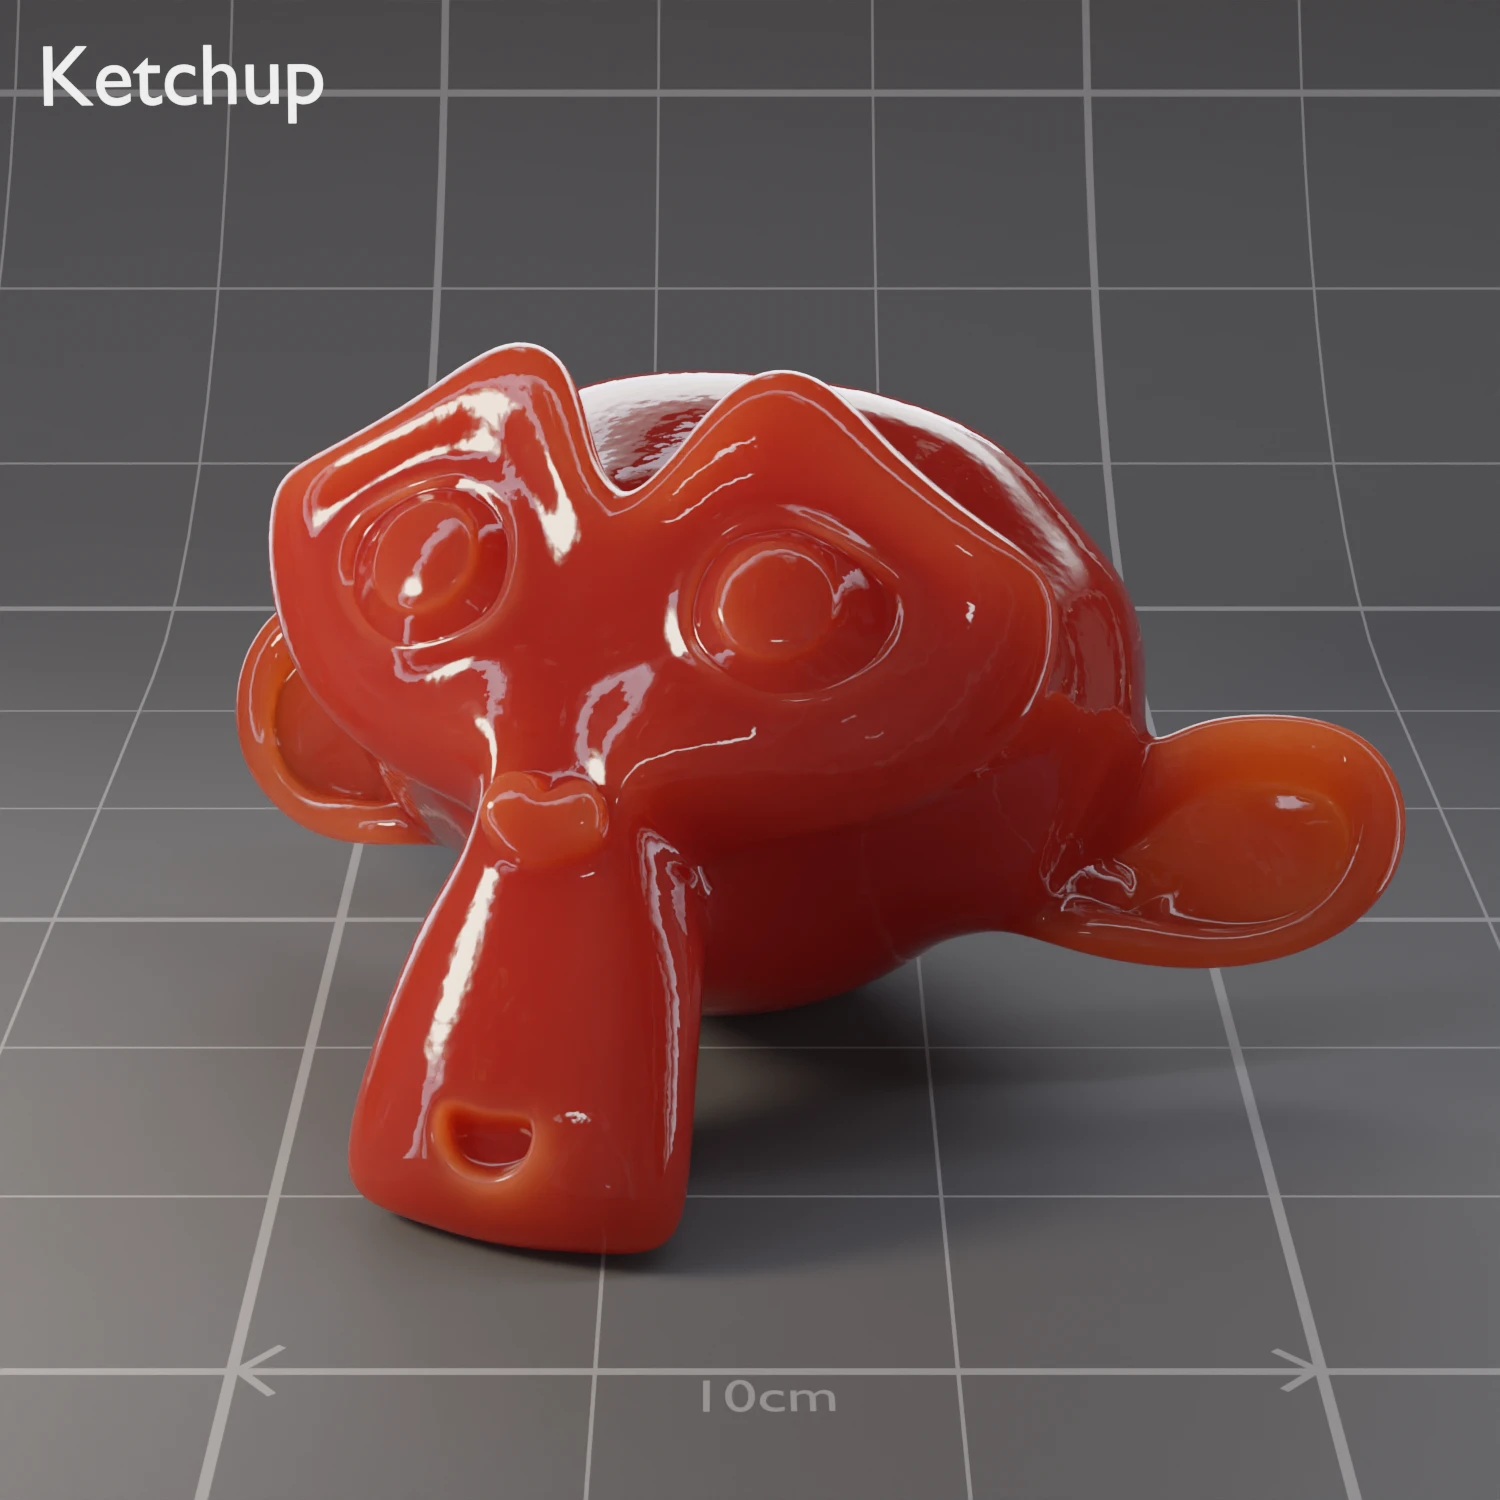 /pr/image/mats/Ketchup.WebP